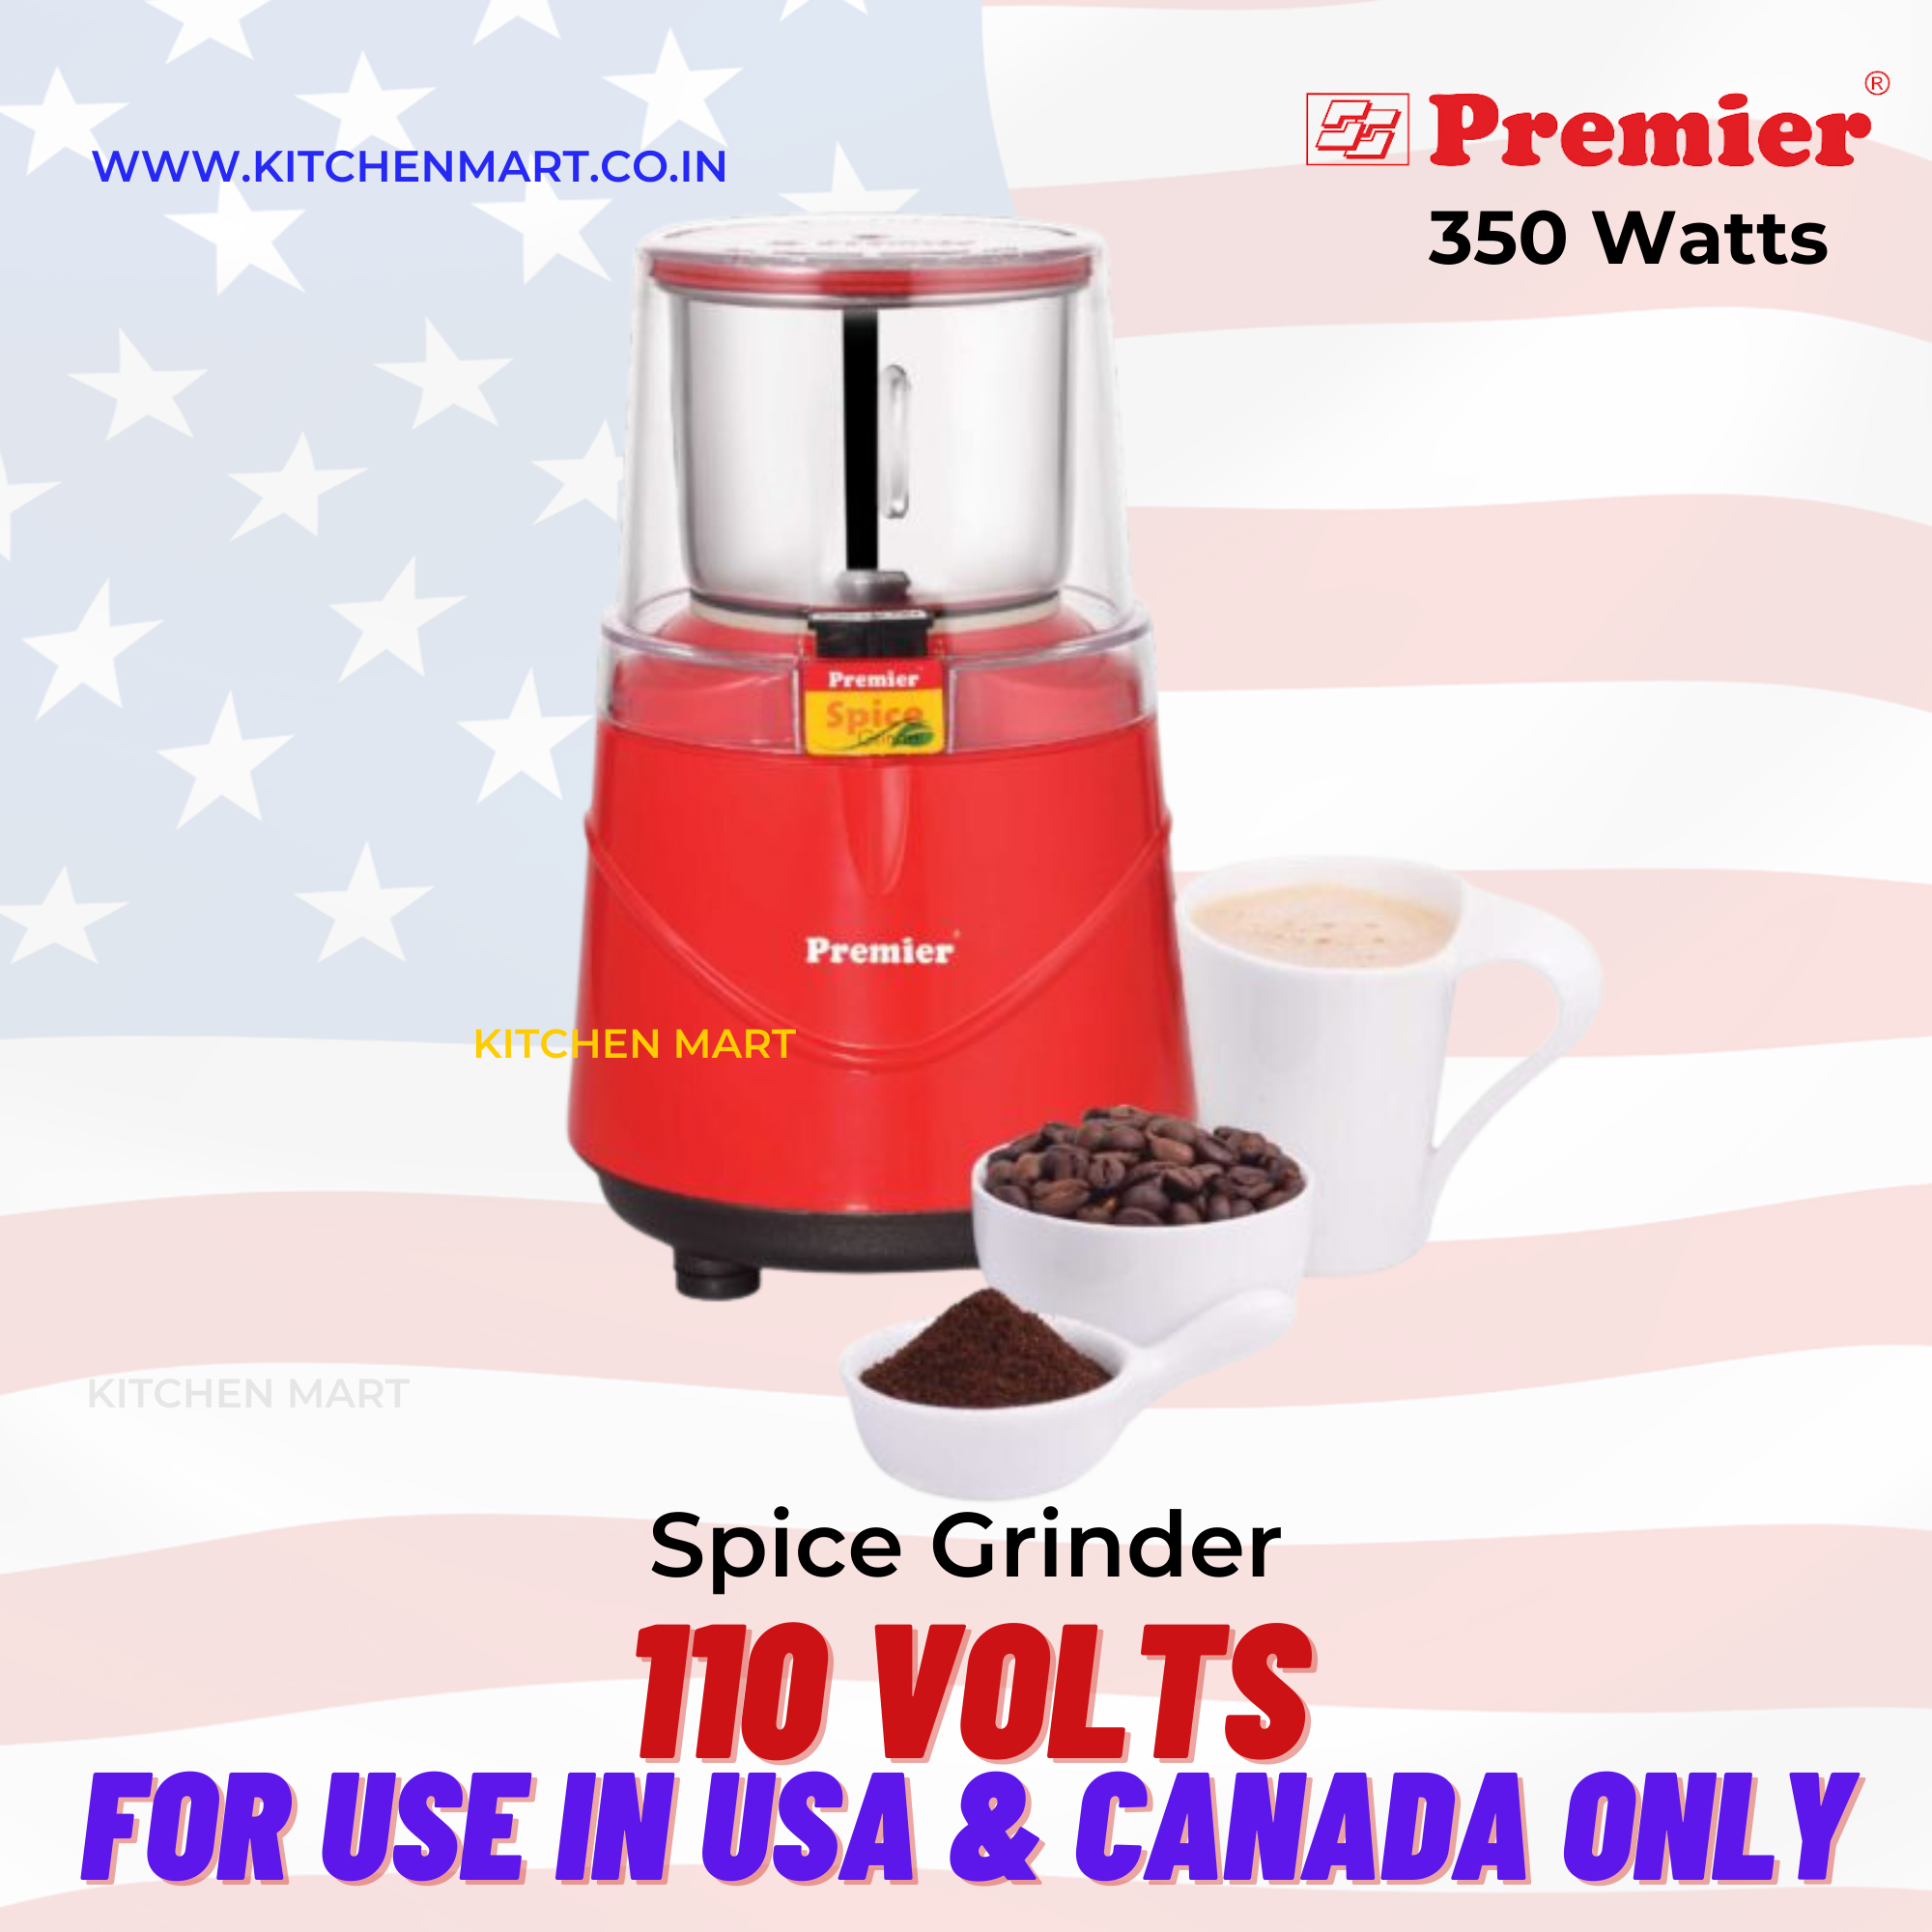 Premier Spice Grinder, Premier Coffee Grinder